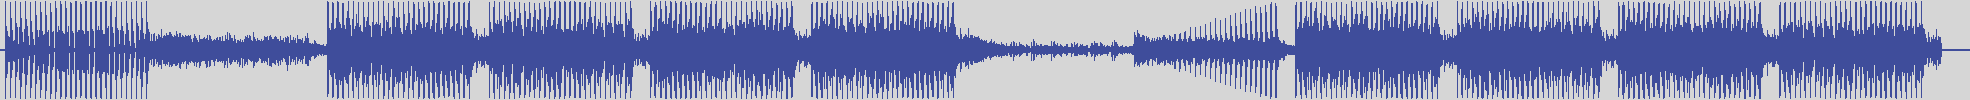 nf_boyz_records [NFY007] Blood Wessel - False Impressions [Steven Vax Mix] audio wave form